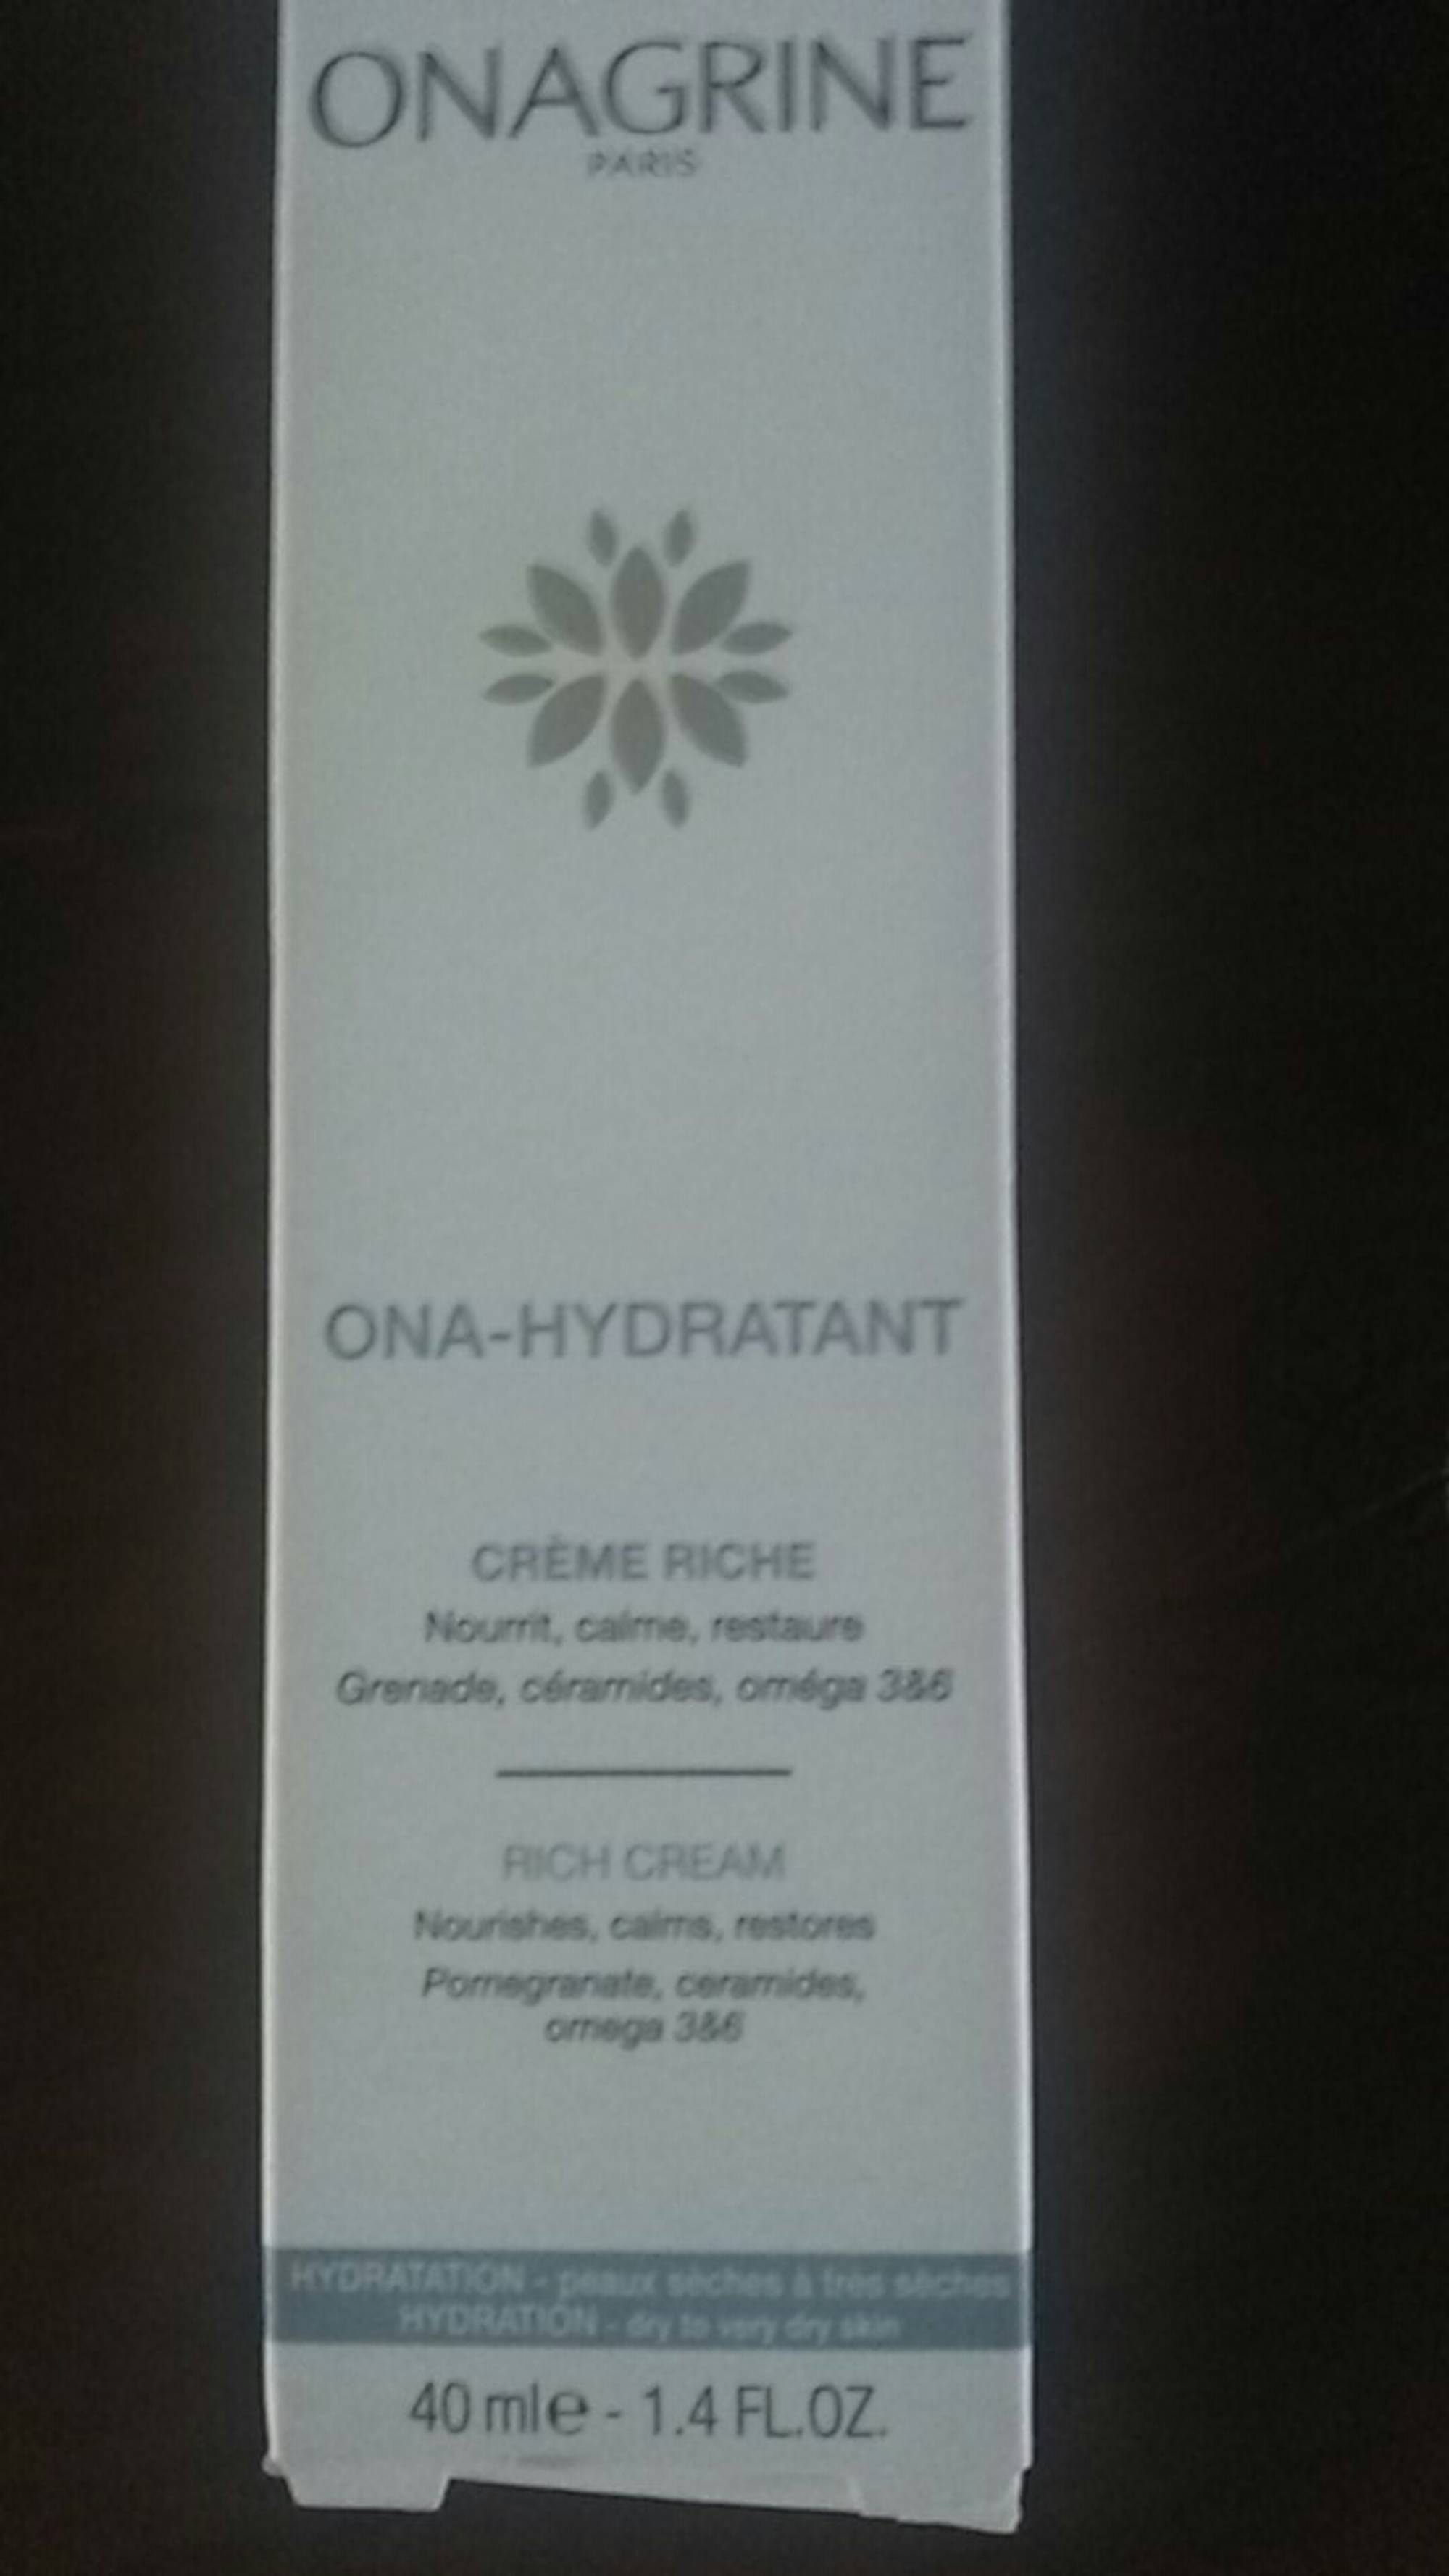 ONAGRINE - Ona-hydratant - Crème riche 